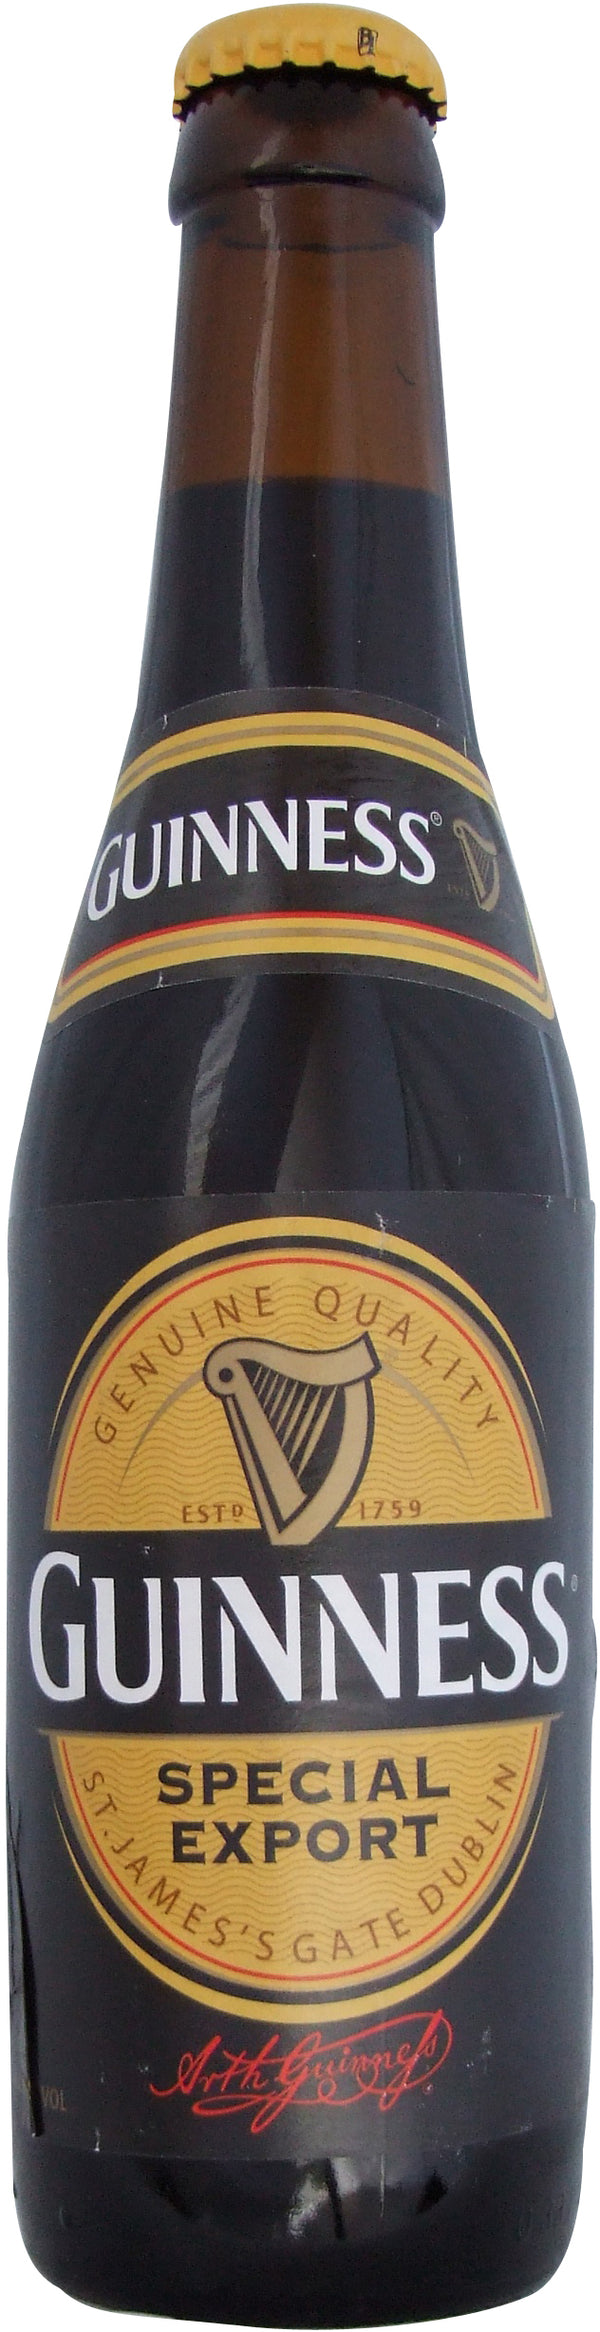 Guinness Special Export (Belgian version) 330ml